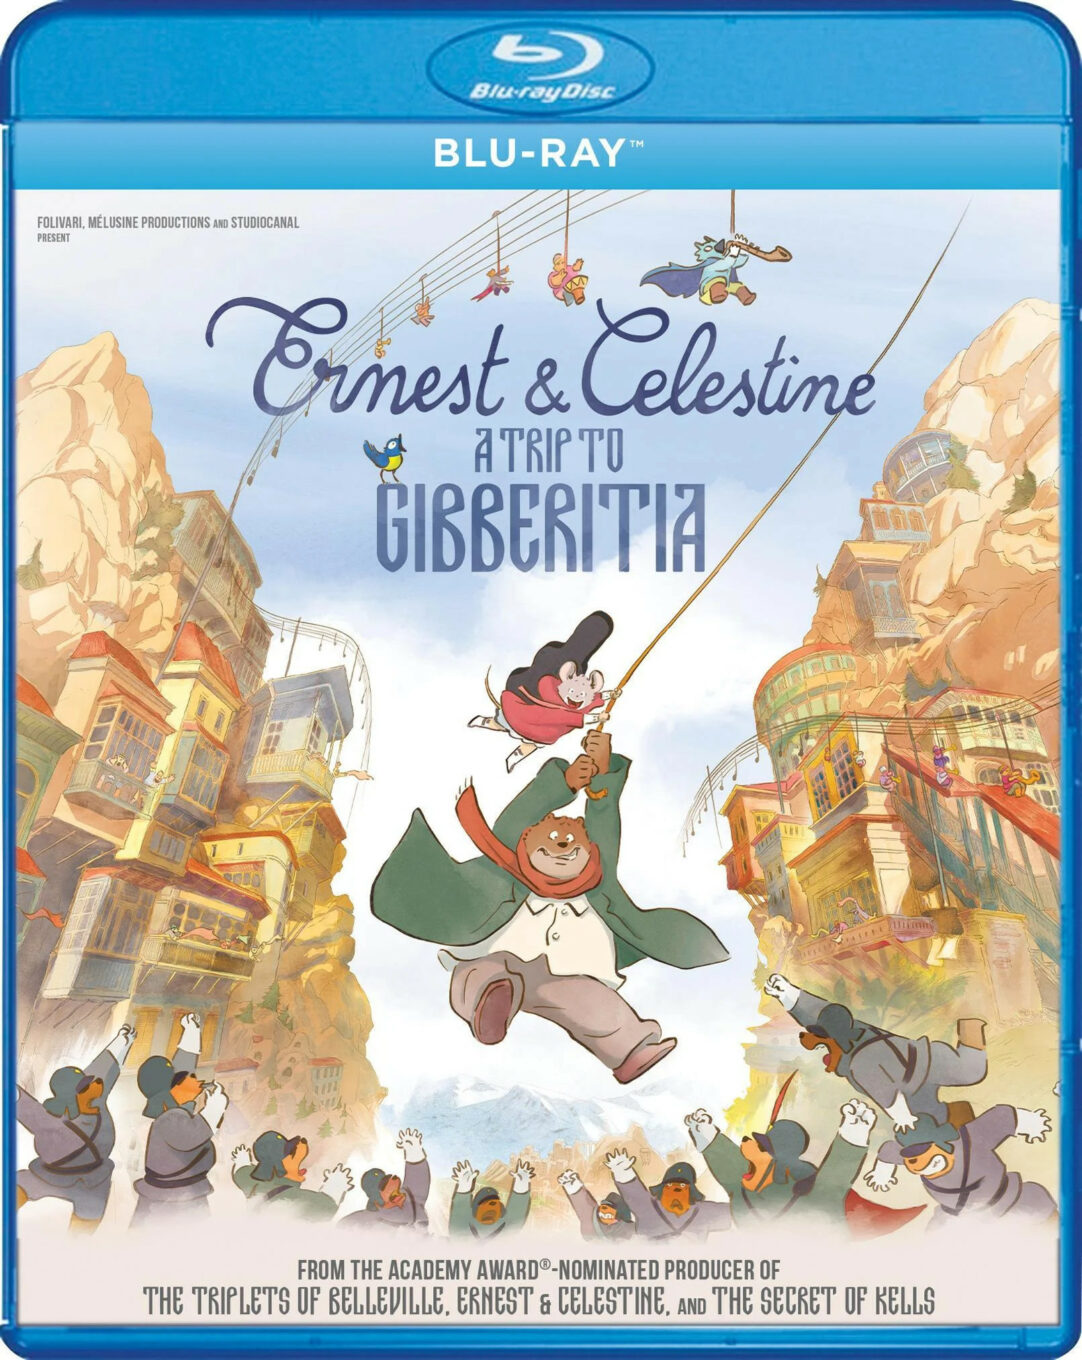 Blu-ray Review: Ernest & Celestine: A Trip to Gibberitia – Inside Pulse